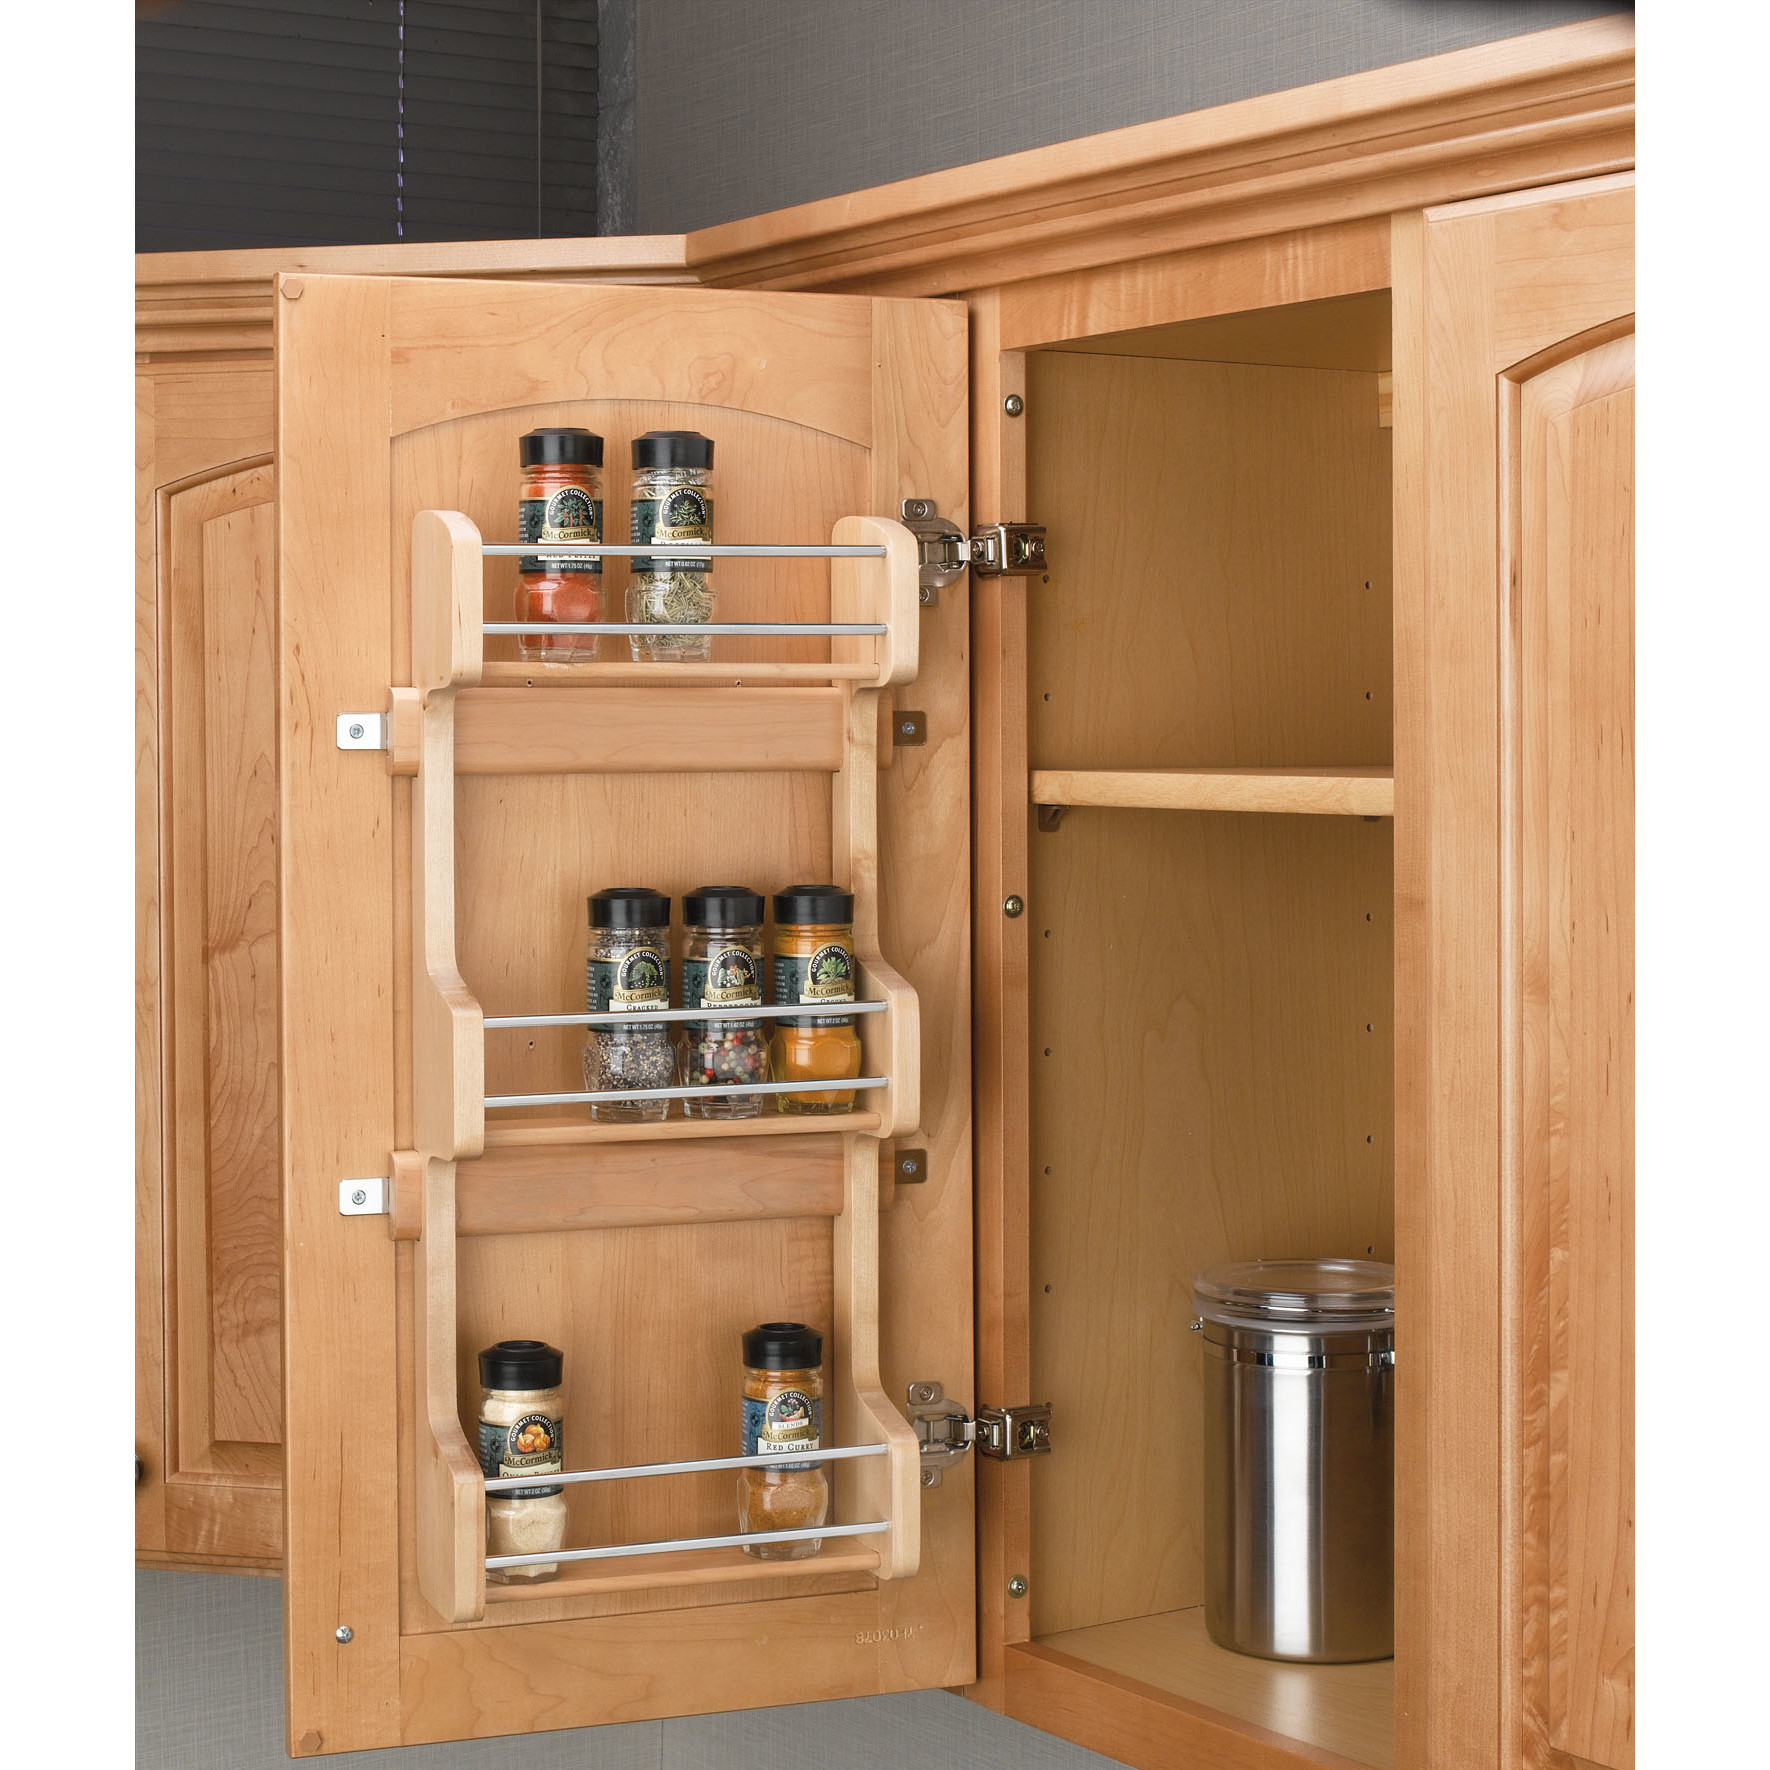 Best ideas about Cabinet Door Spice Rack
. Save or Pin Rev A Shelf Cabinet Door Mount 3 Shelf Spice Rack Now.